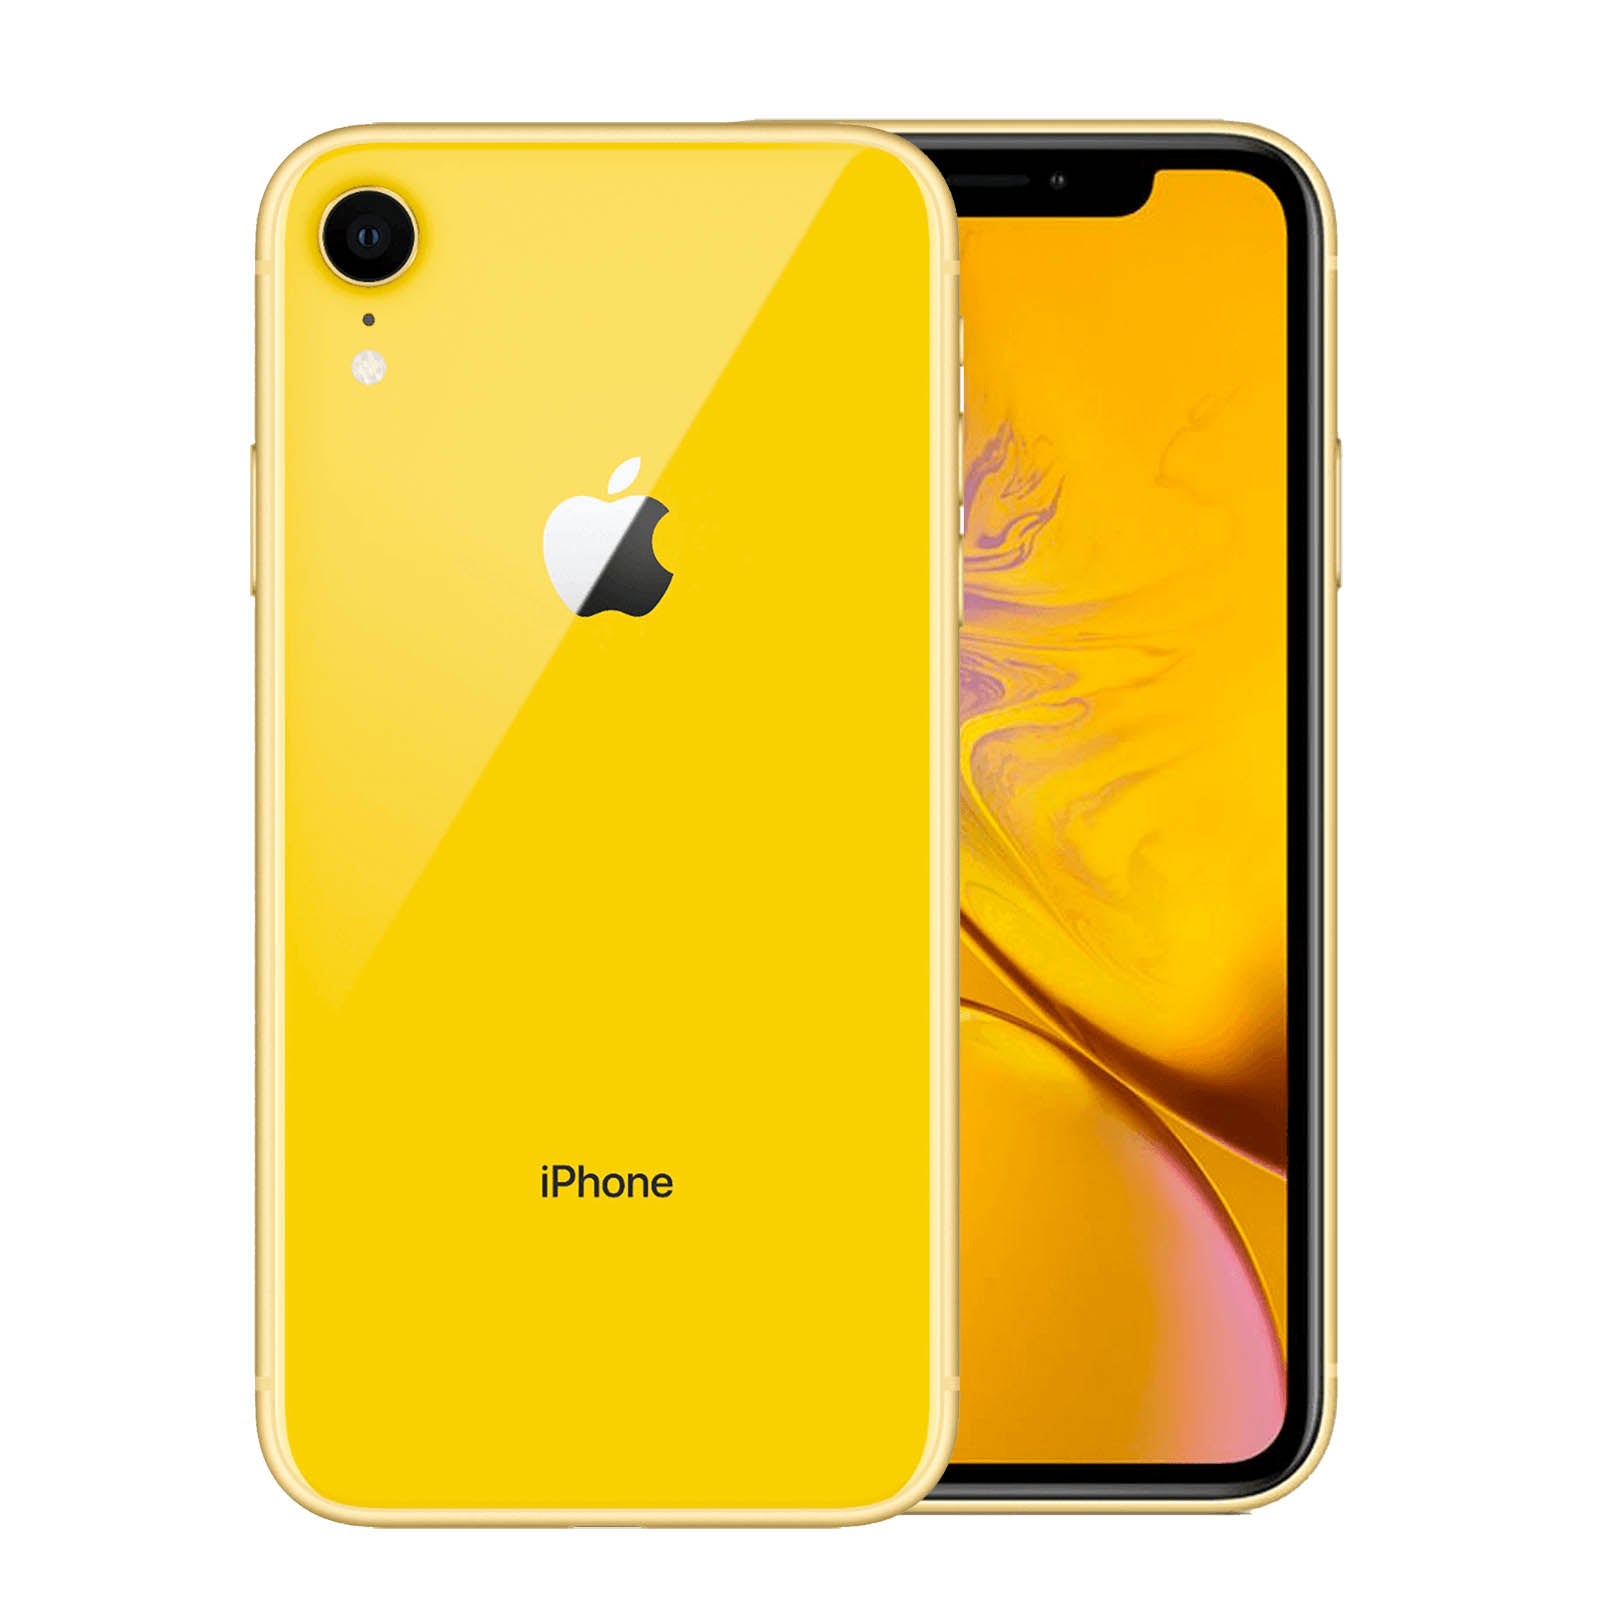 Apple iPhone XR 64GB Yellow Very Good - Unlocked